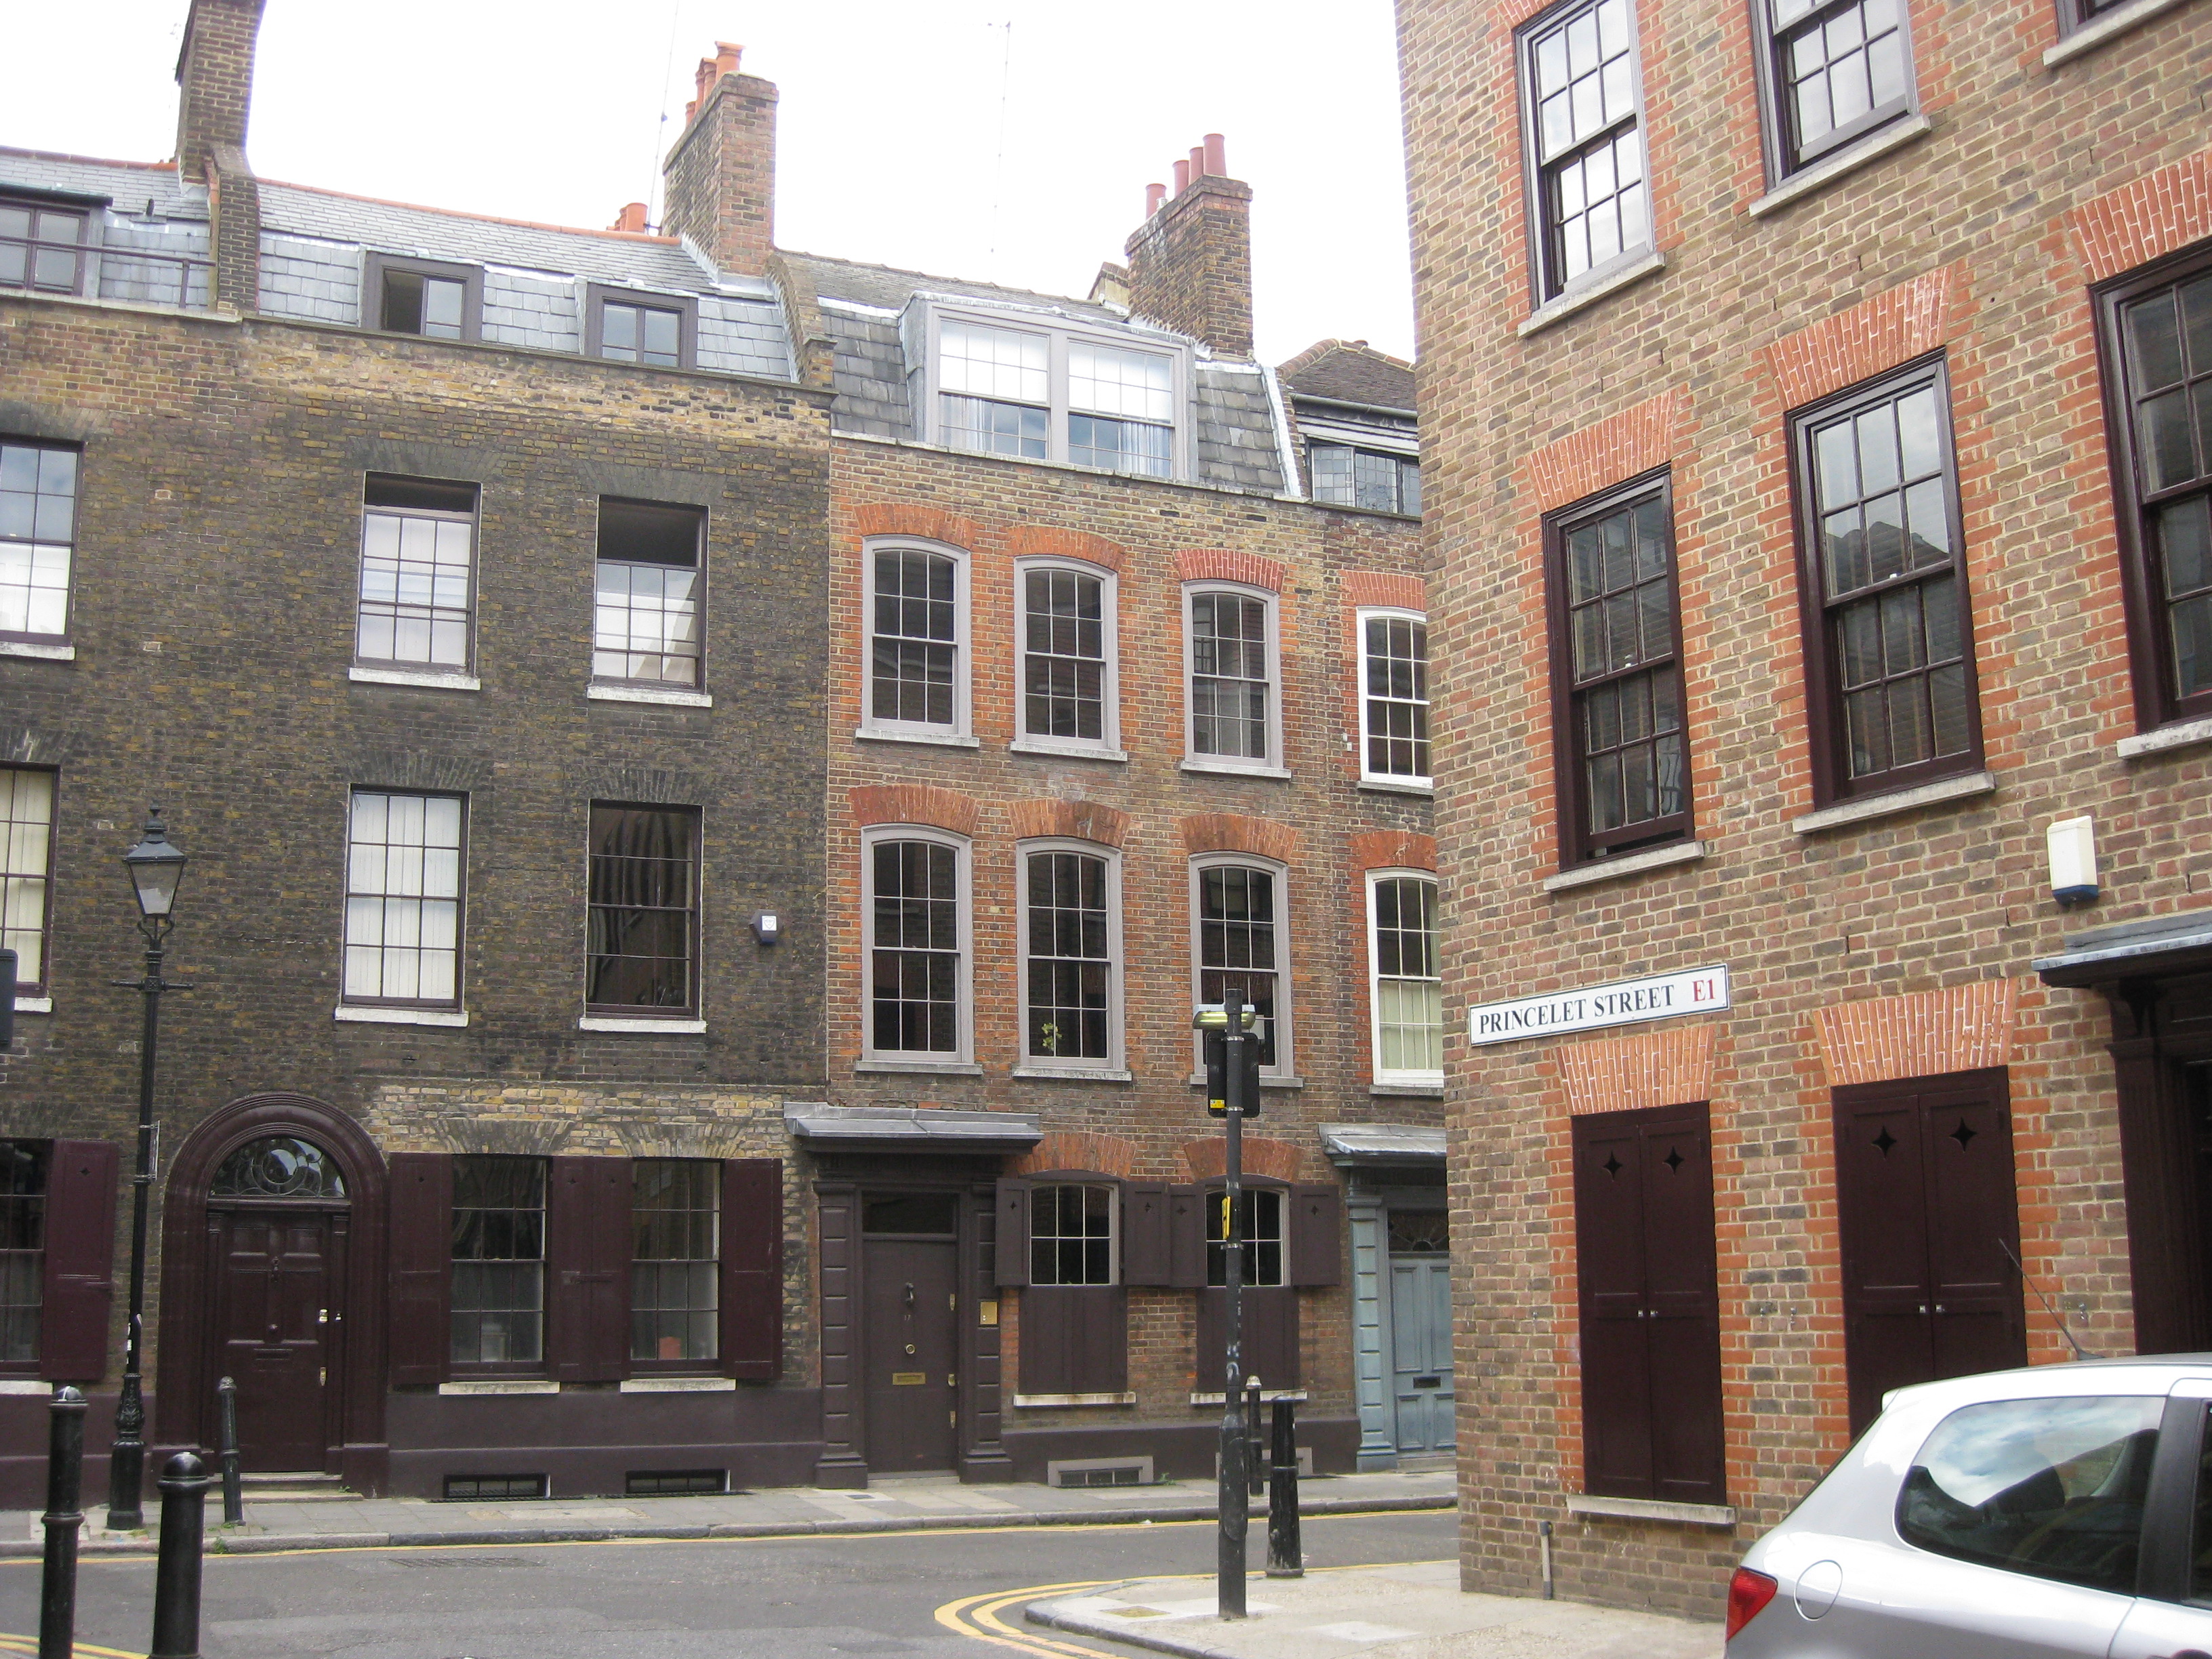 Jewish East End of London - Princelet Street